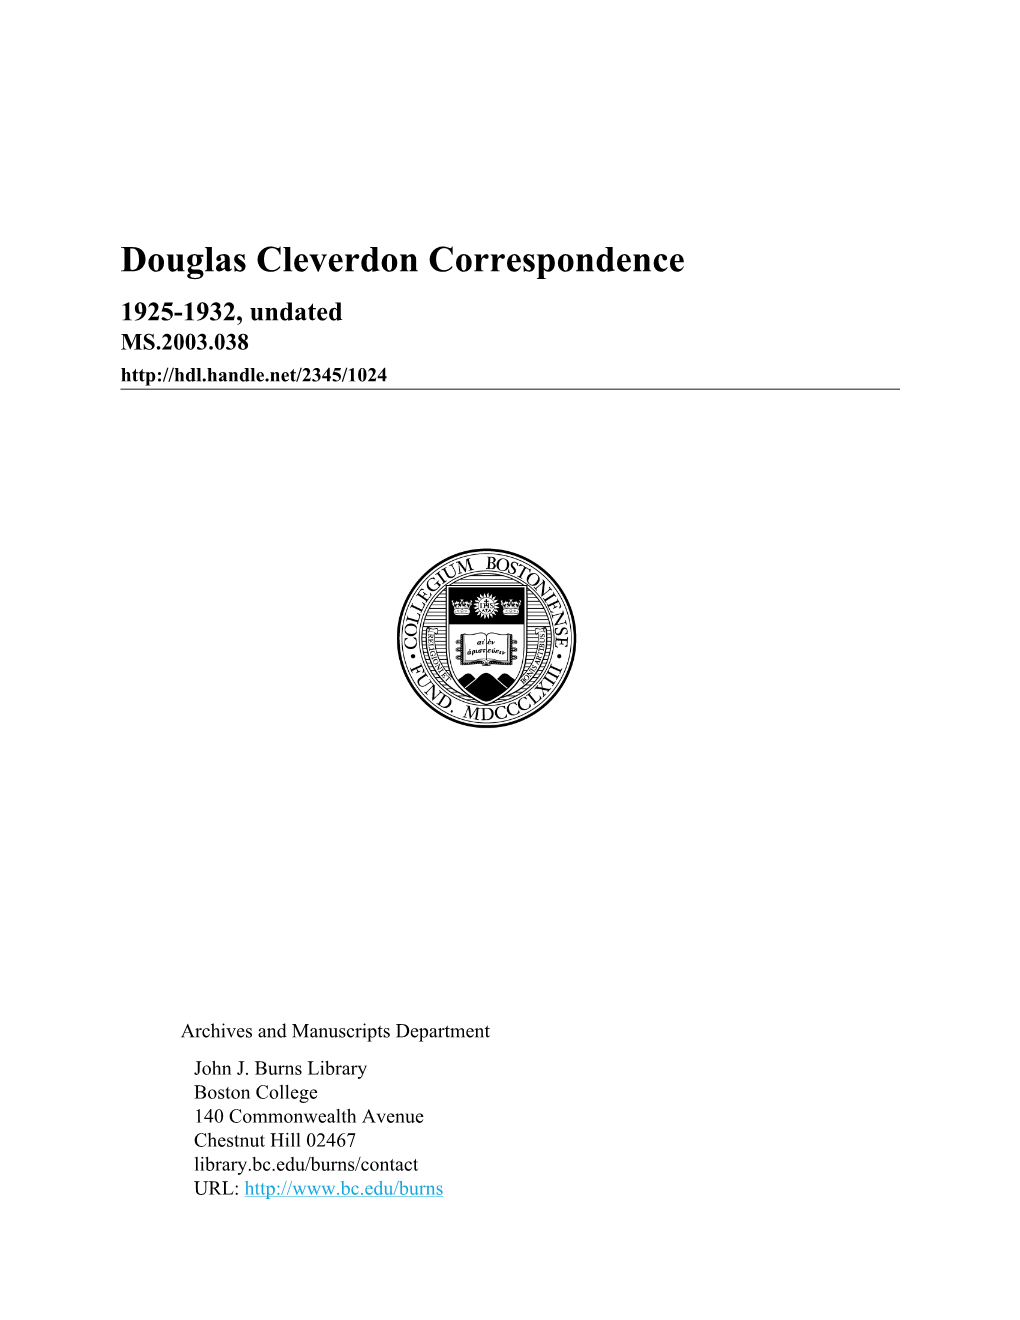 Douglas Cleverdon Correspondence 1925-1932, Undated MS.2003.038